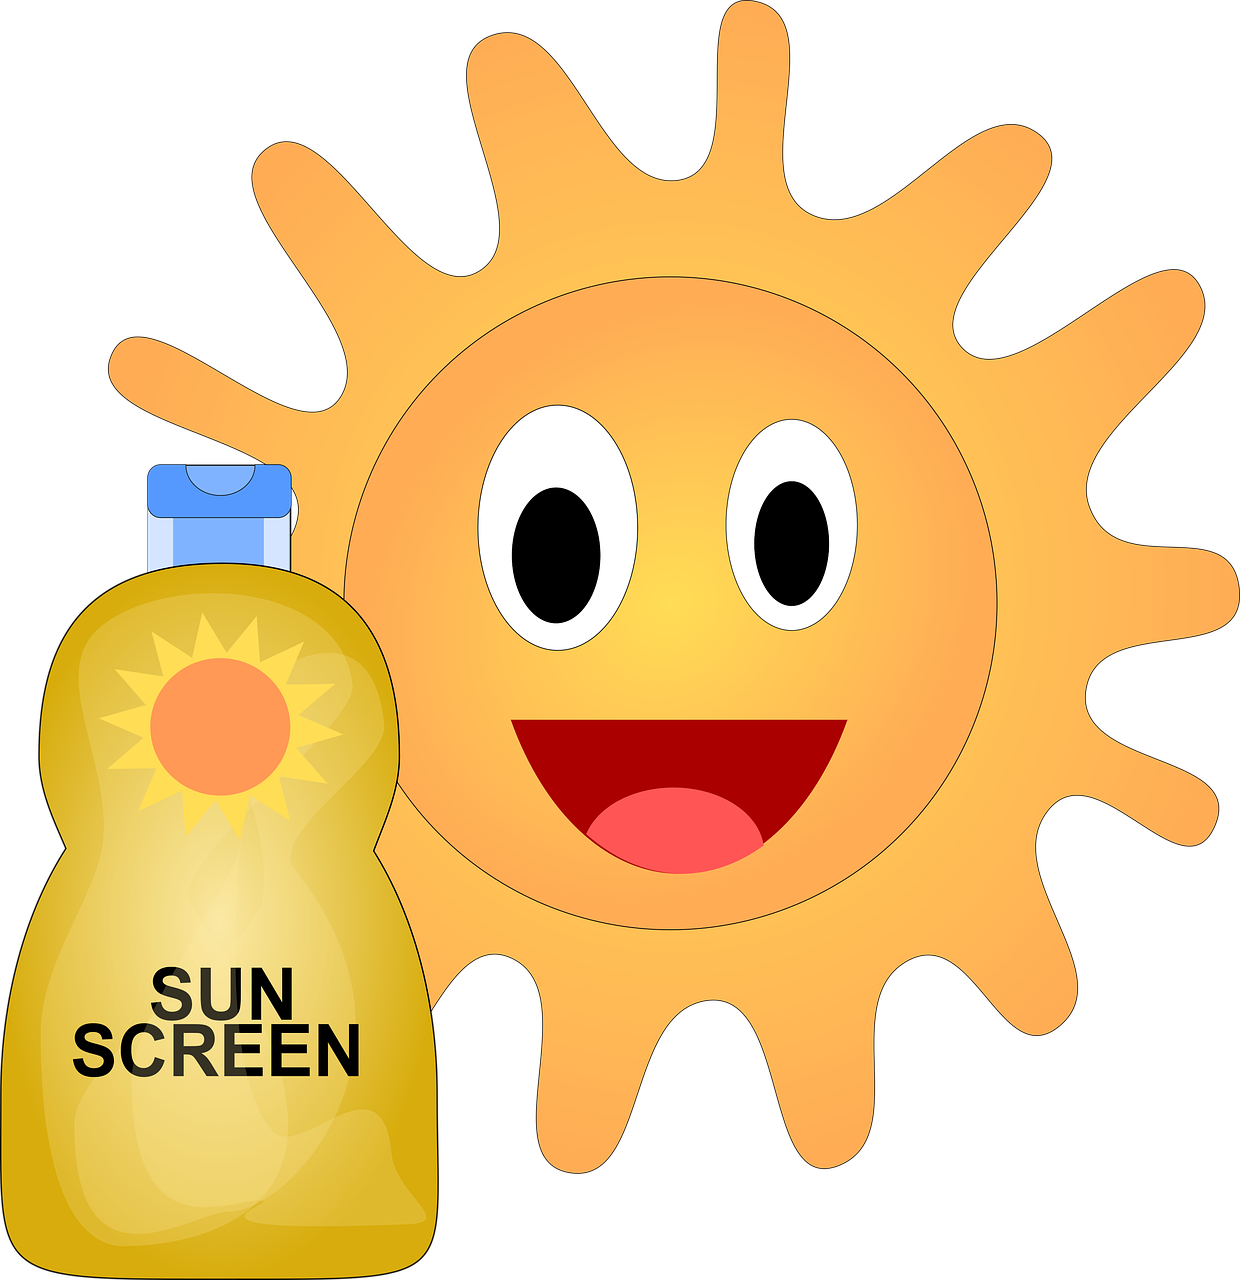 sunscrean  sun  uv rays free photo